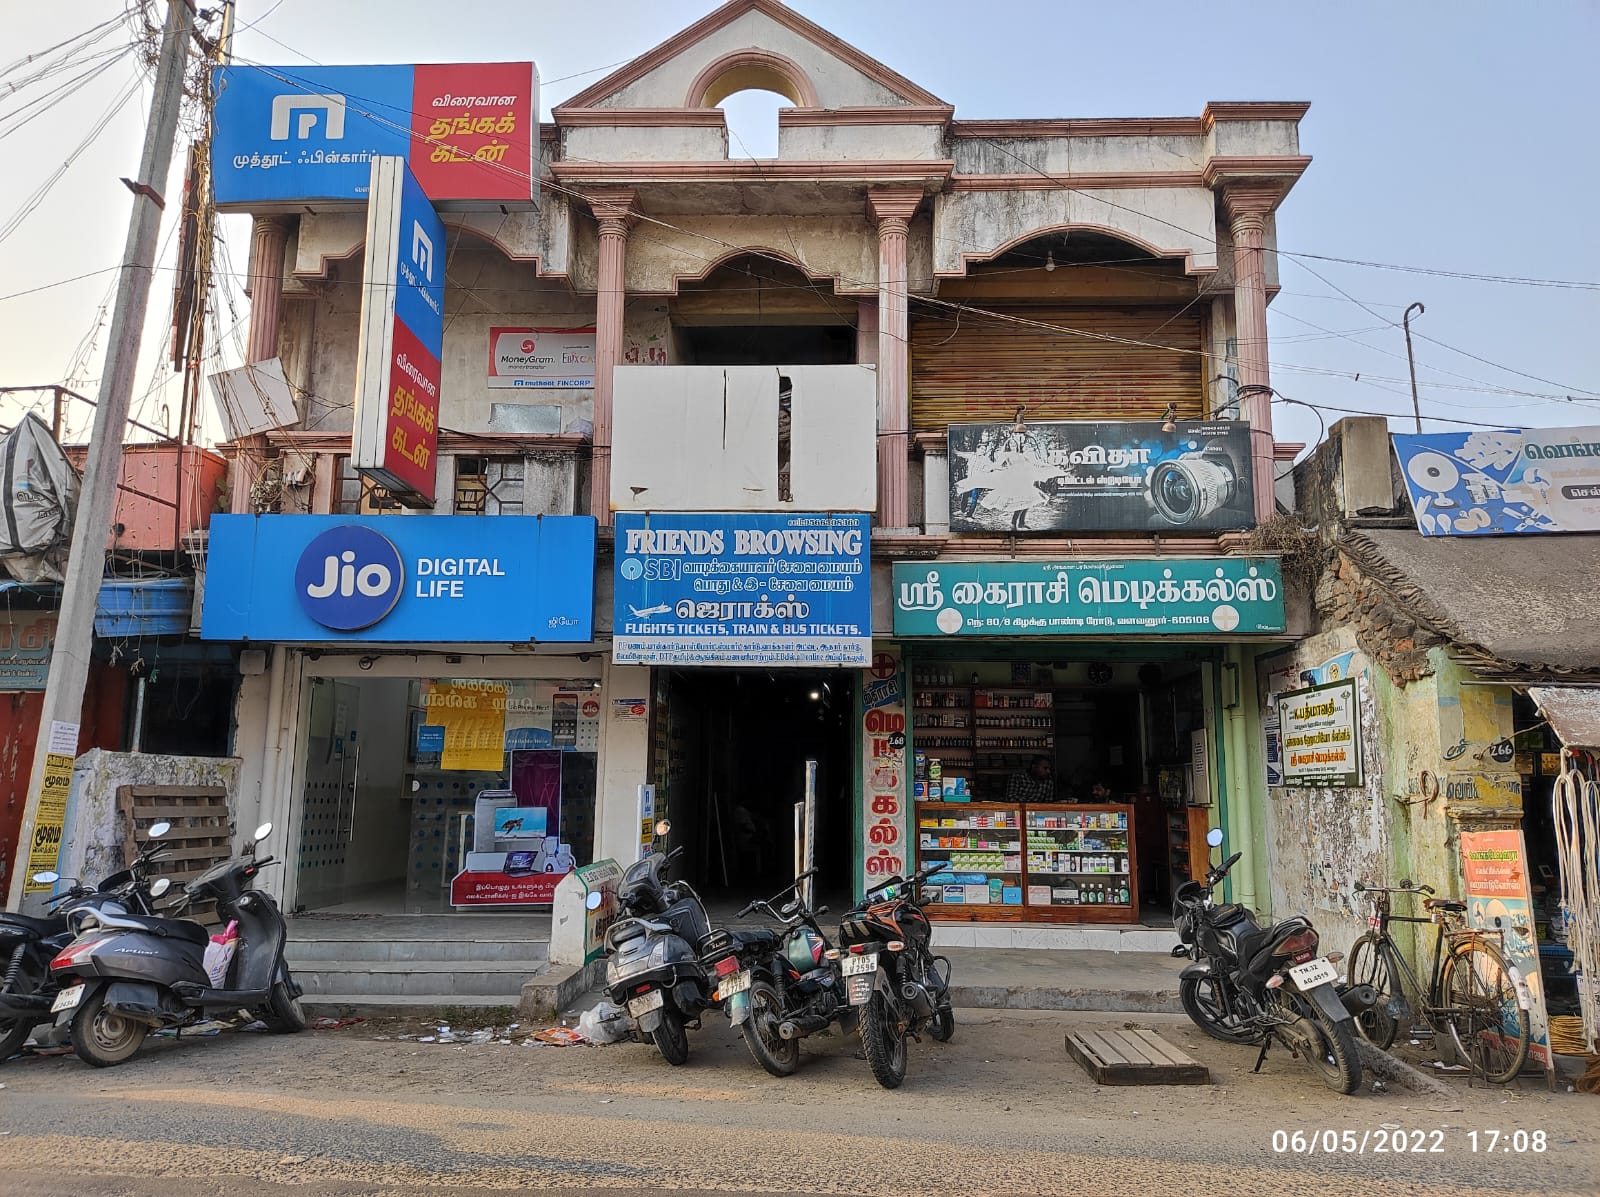 Muthoot Fincorp Gold Loan Services in Valavanur, Villupuram, Tamil Nadu